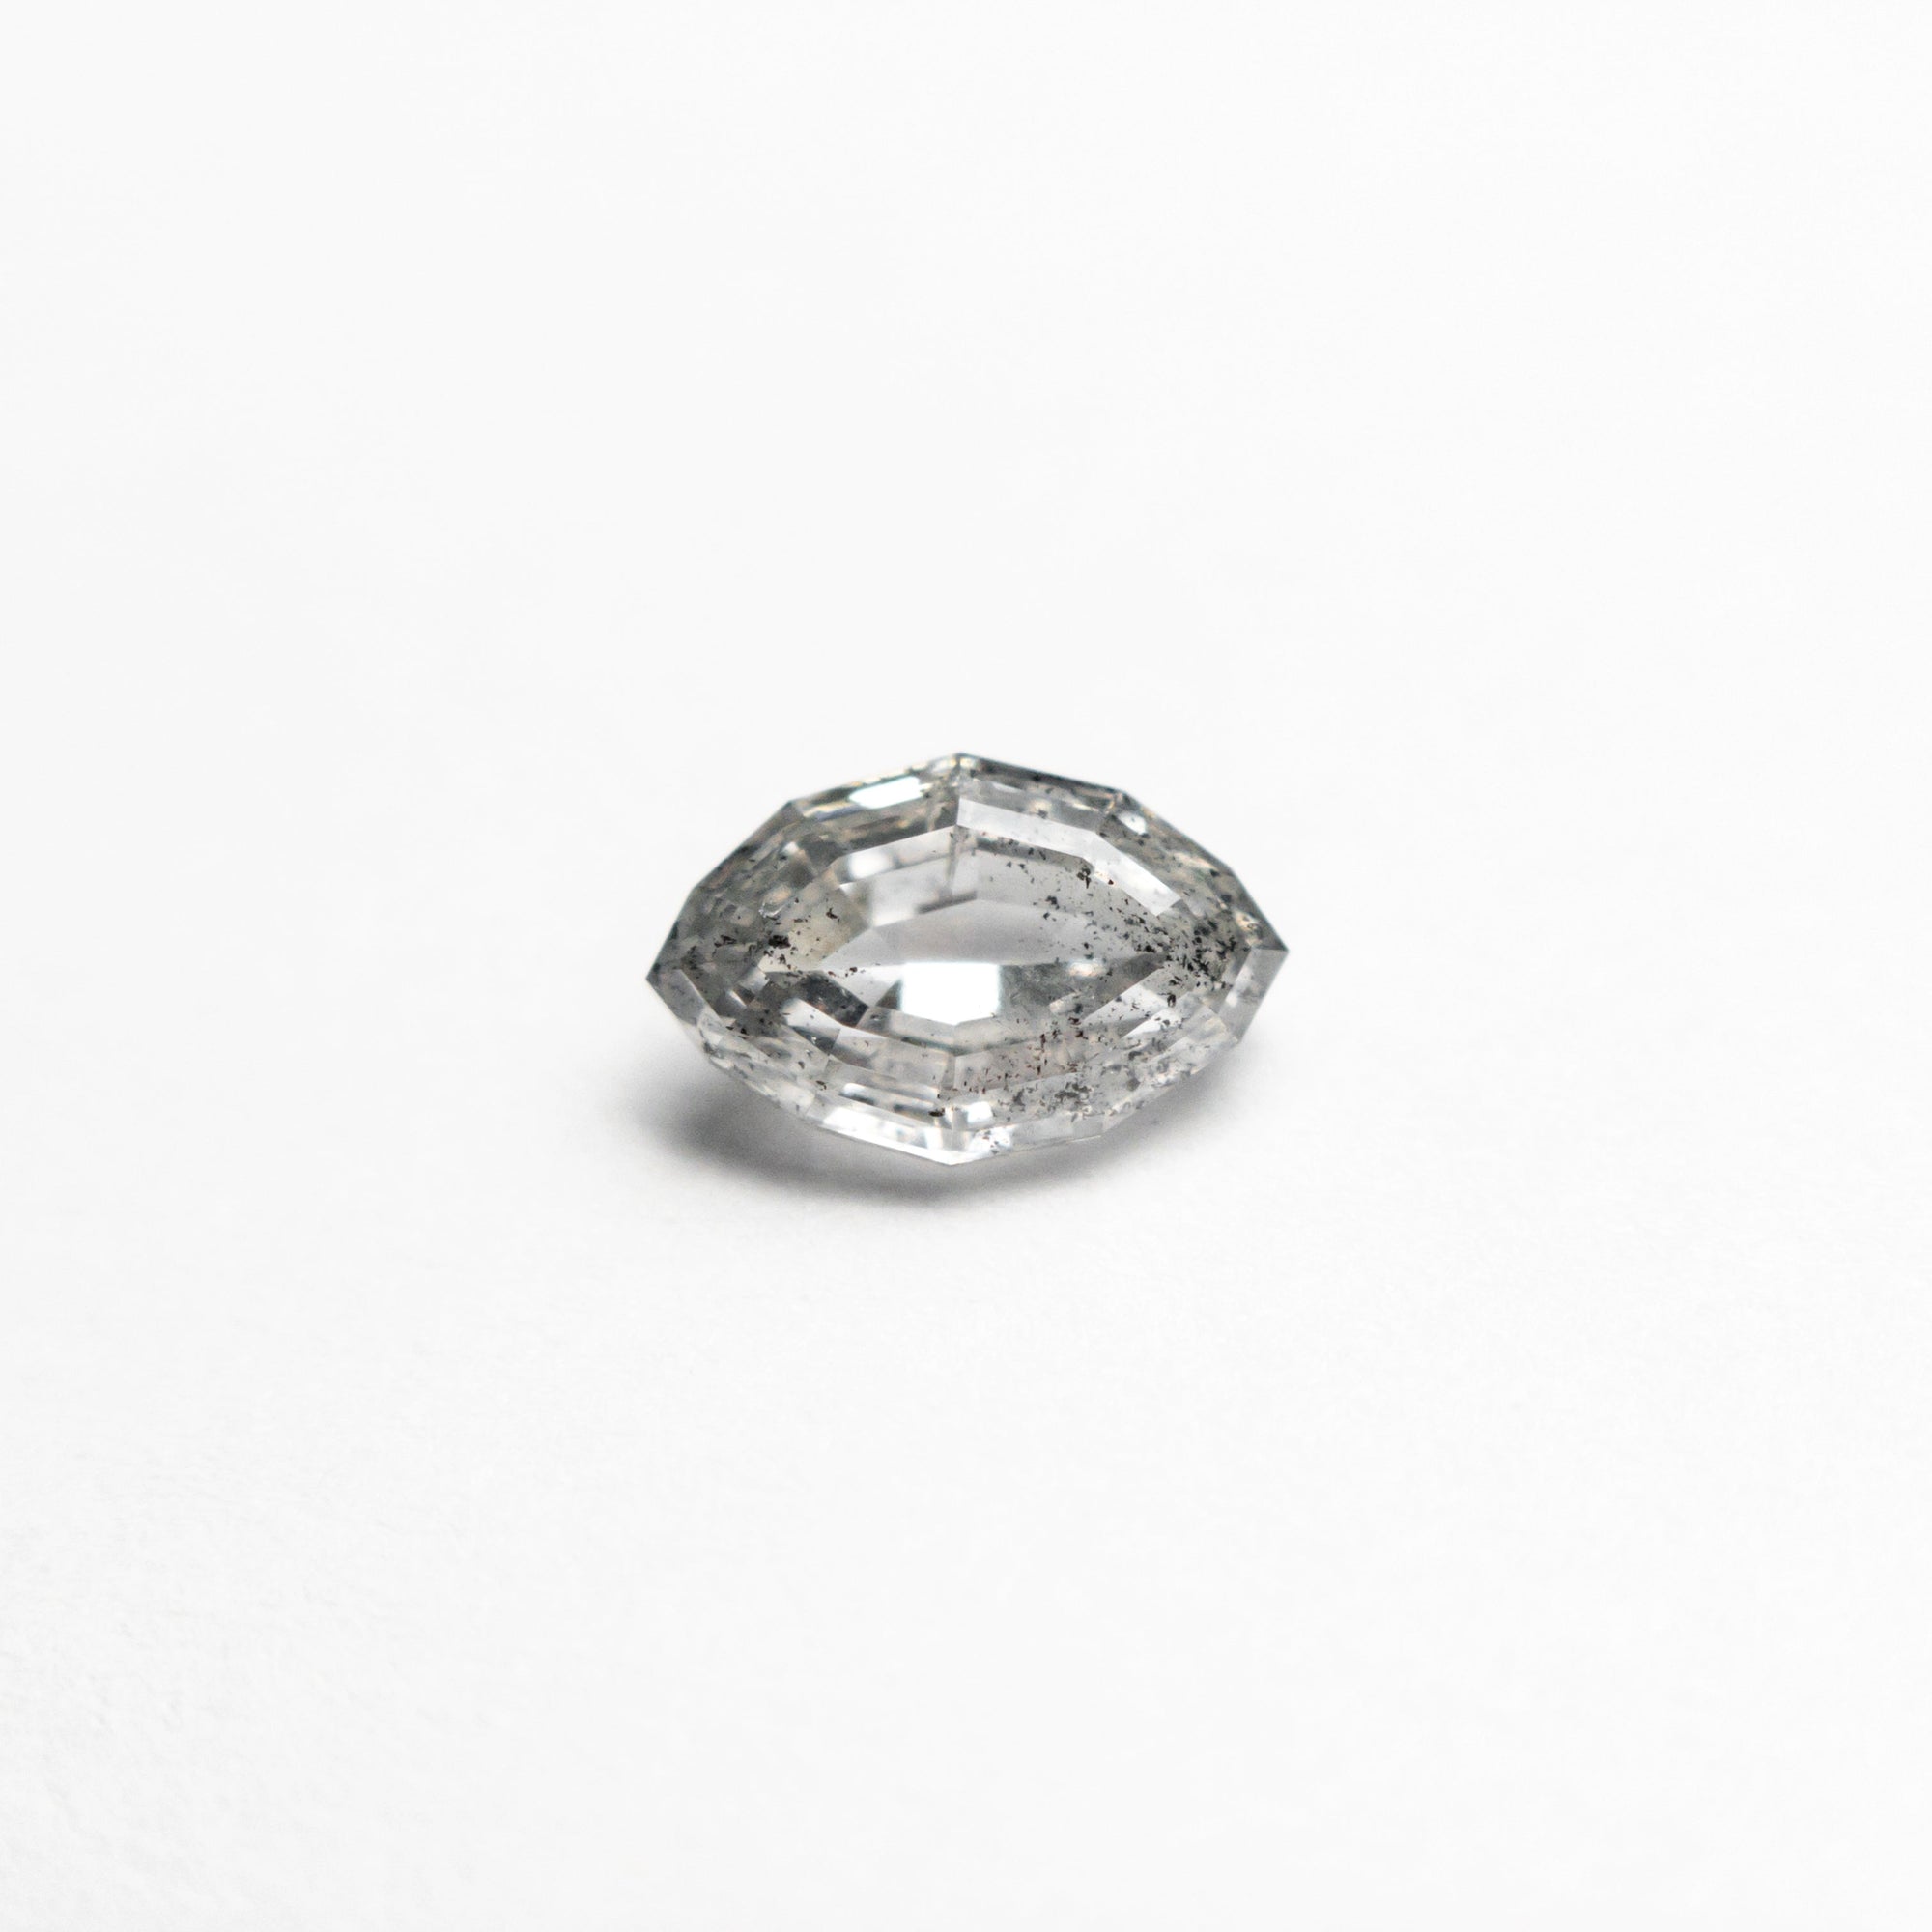 Moon Bay Icy Pear Cut Diamond Ring